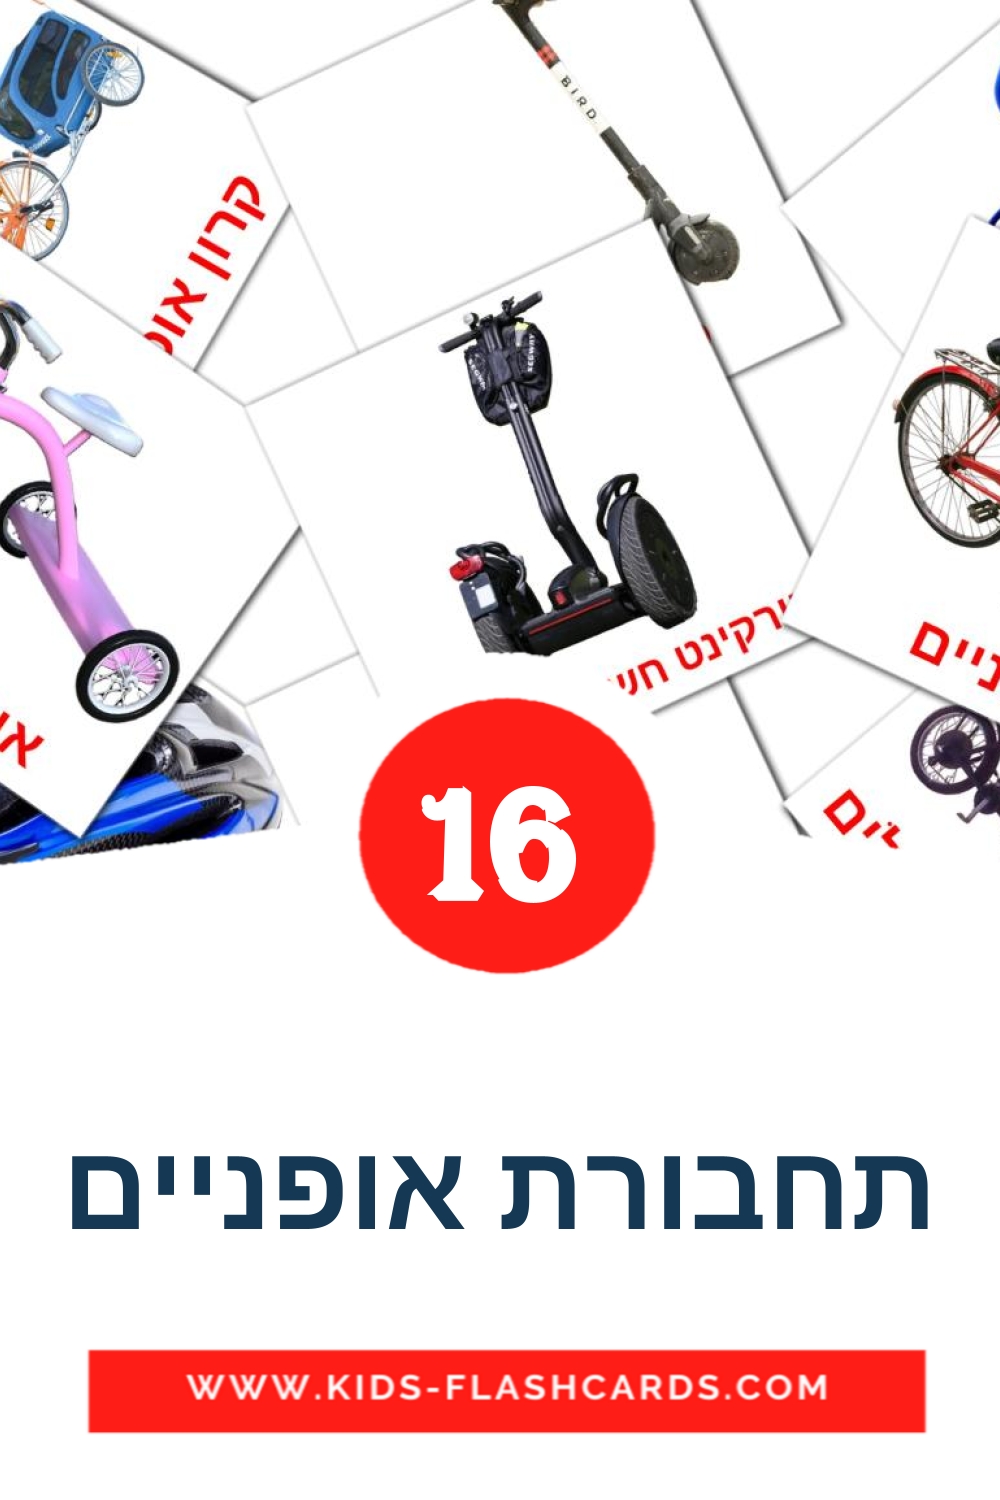 16 carte illustrate di תחבורת אופניים per la scuola materna in ebraico